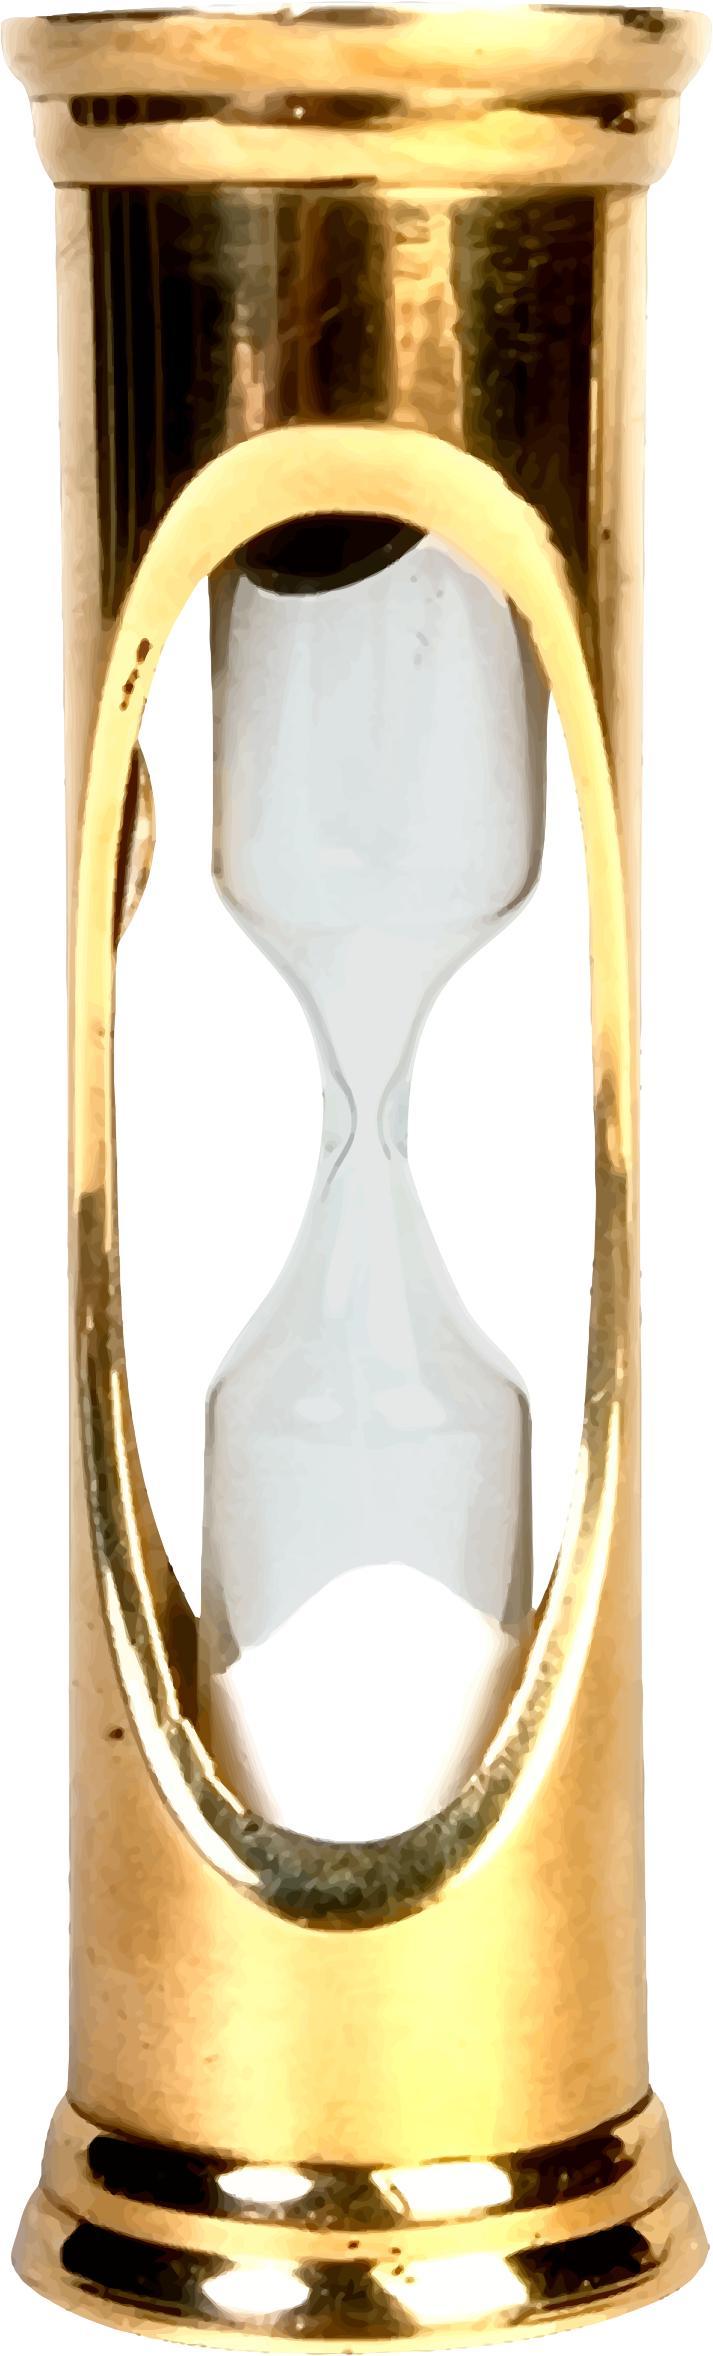 Hourglass 2 png transparent